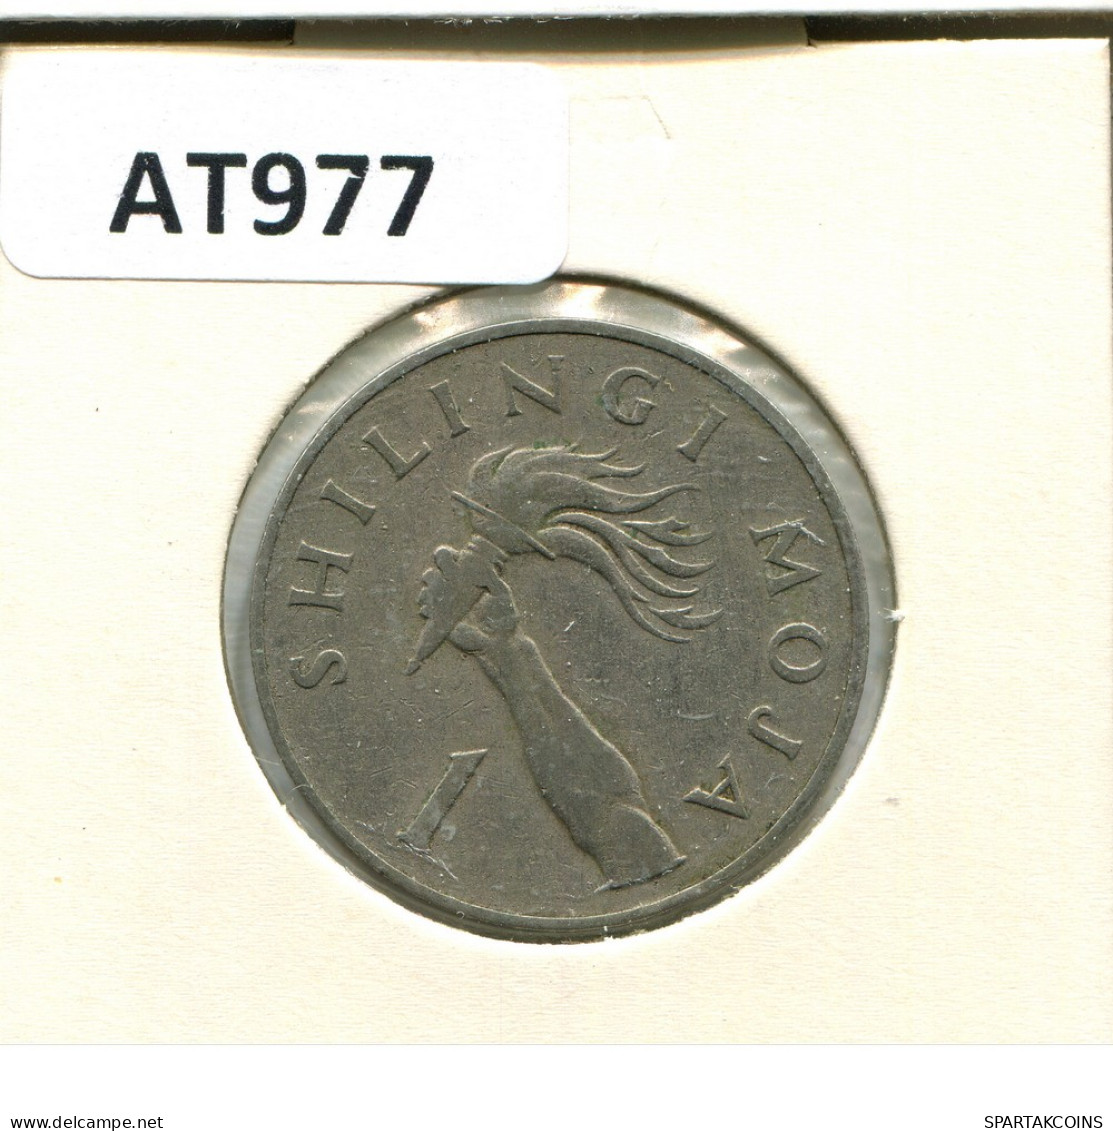 1 SHILLINGI 1974 TANZANIA Coin #AT977.U - Tanzanie